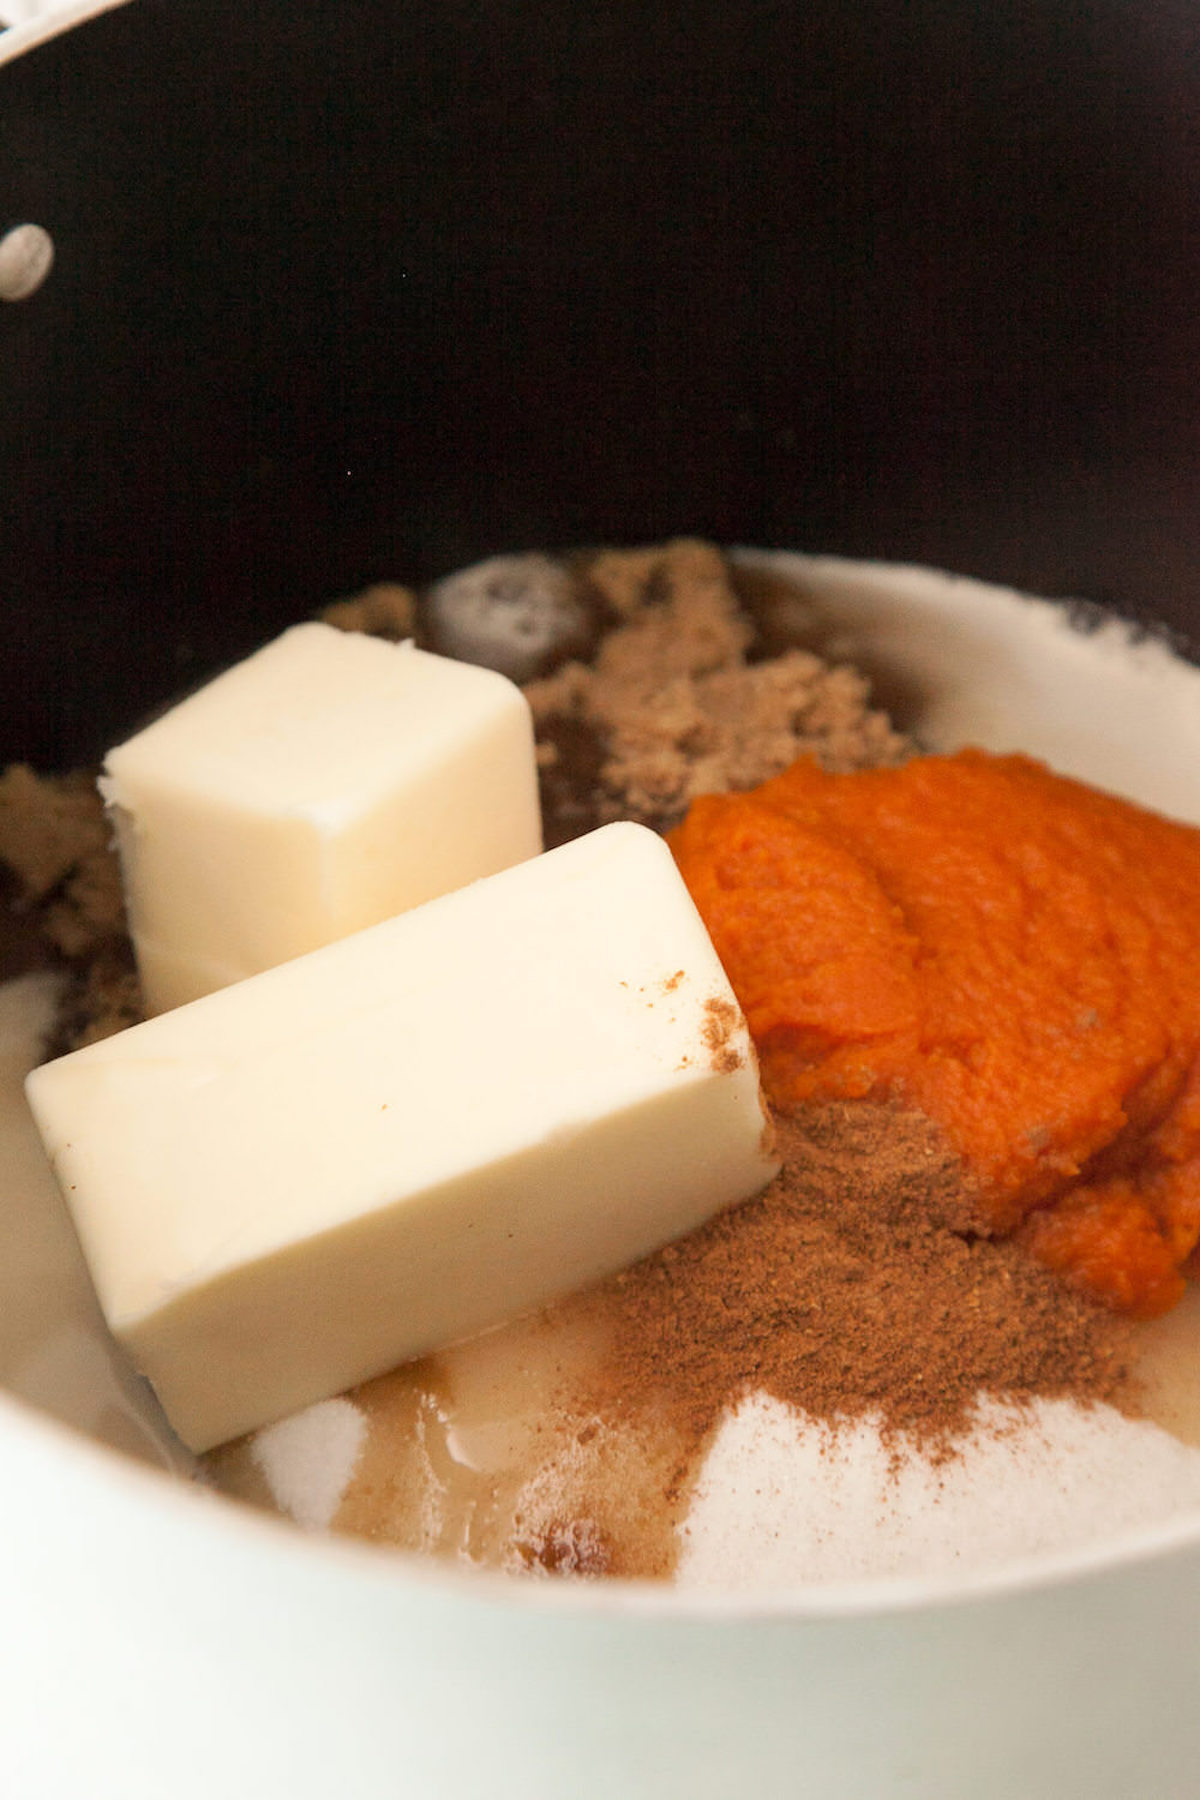 Combine sugar, brown sugar, evaporated milk, pumpkin, butter, salt, and spice in a medium saucepan